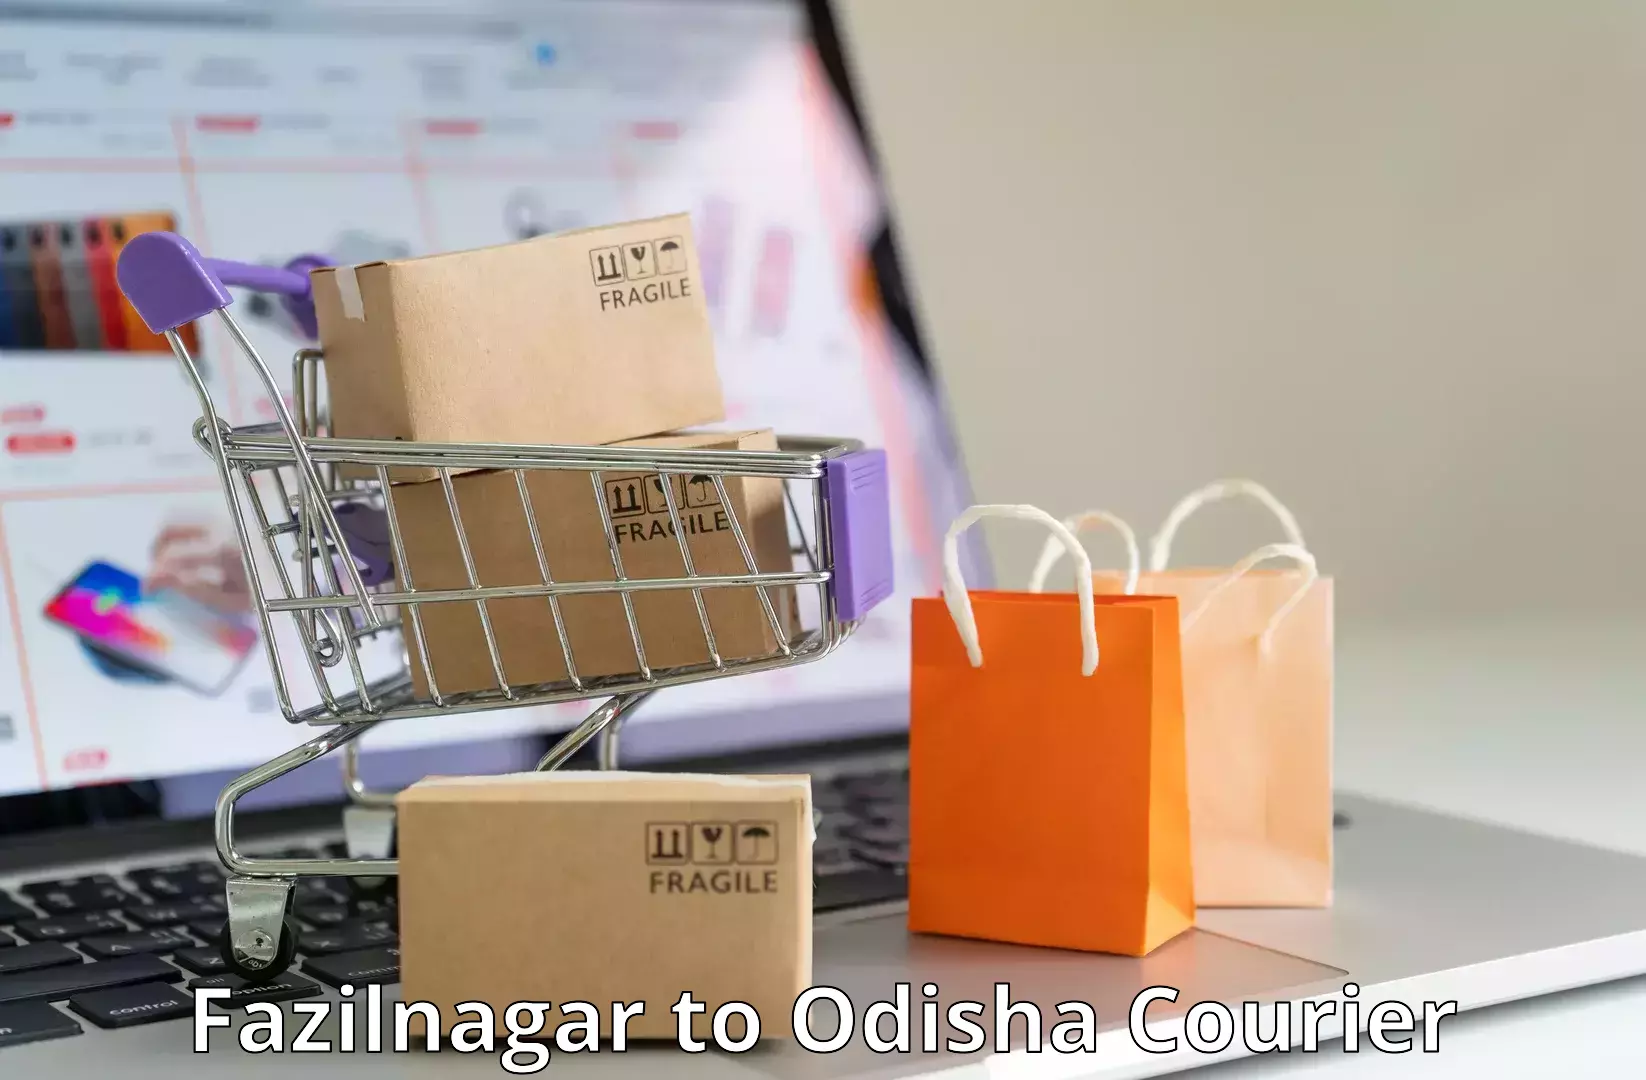 Courier service innovation Fazilnagar to Bhanjanagar